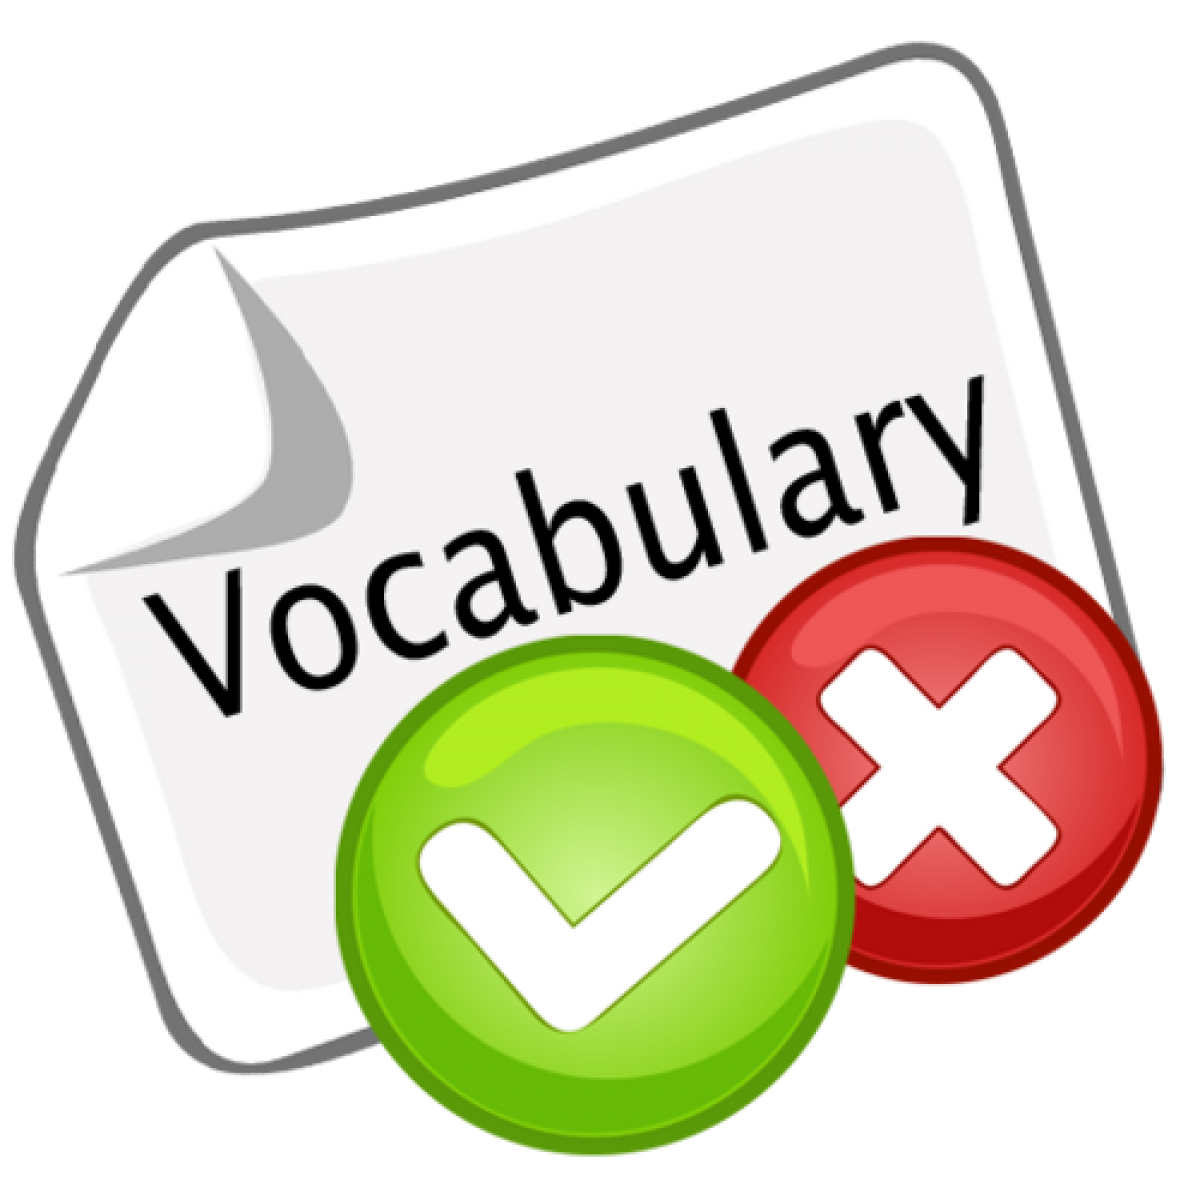 Dictionary clipart vocabulary.